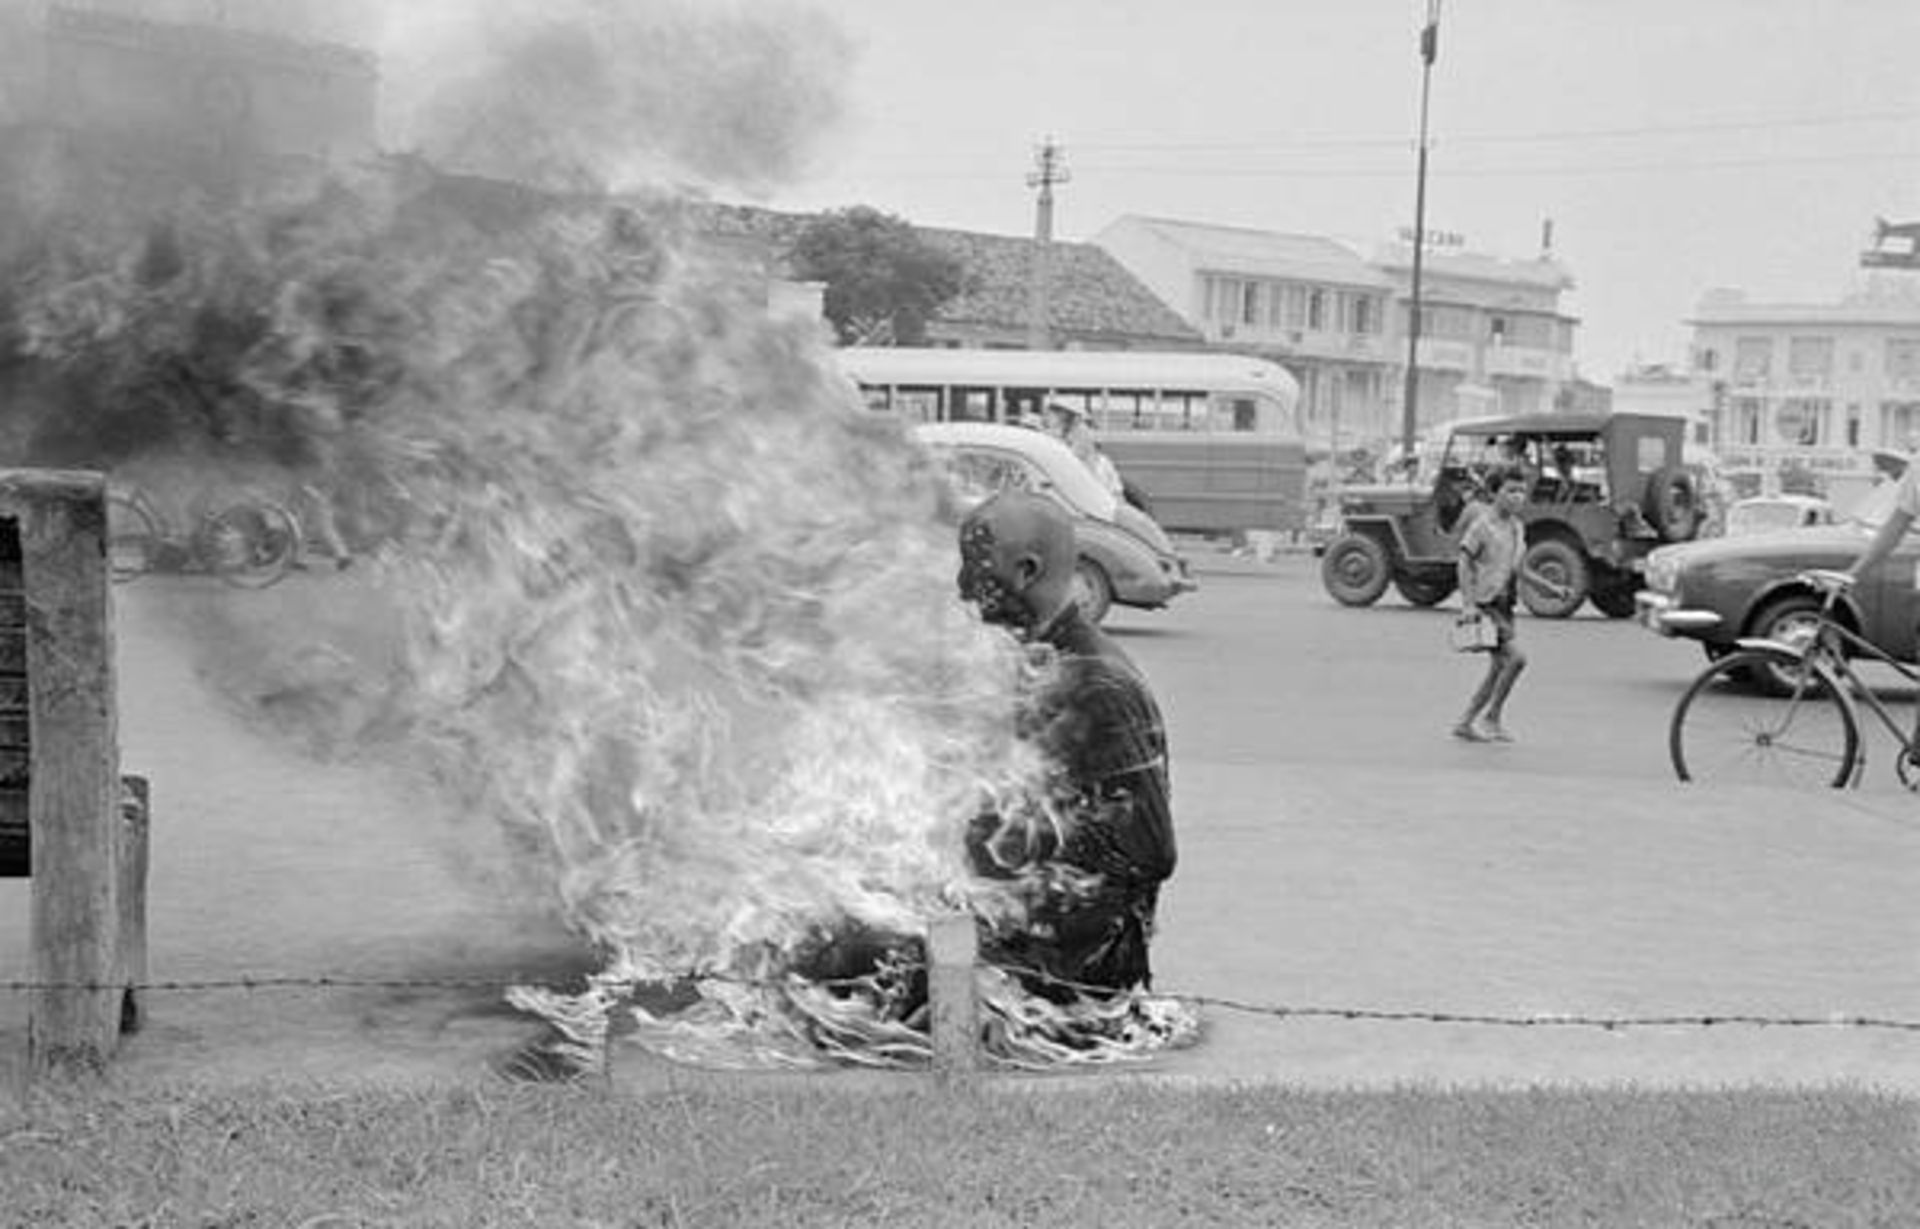 Vietnam War "Monk, Protest, Fire" Photo Print